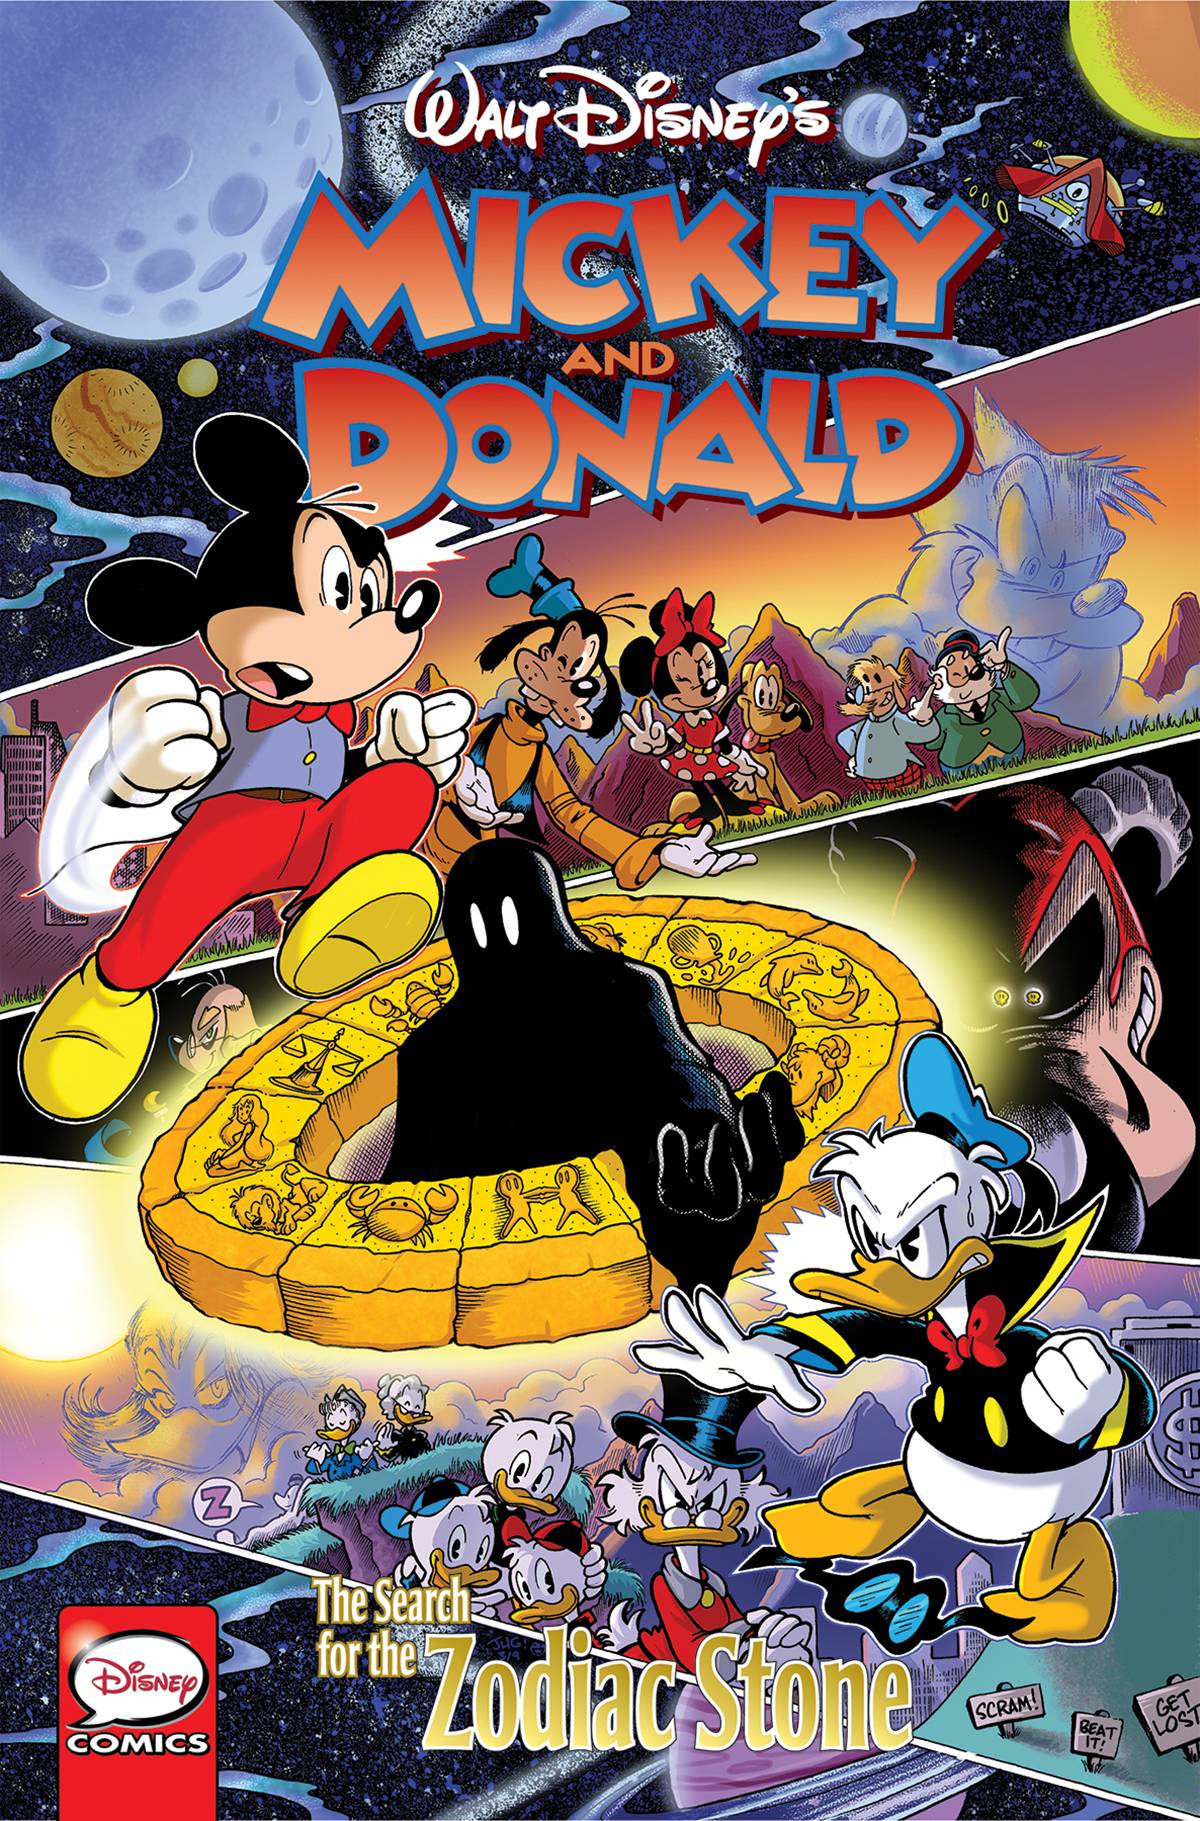 Mickey & Donald Hardcover Search For Zodiac Stone